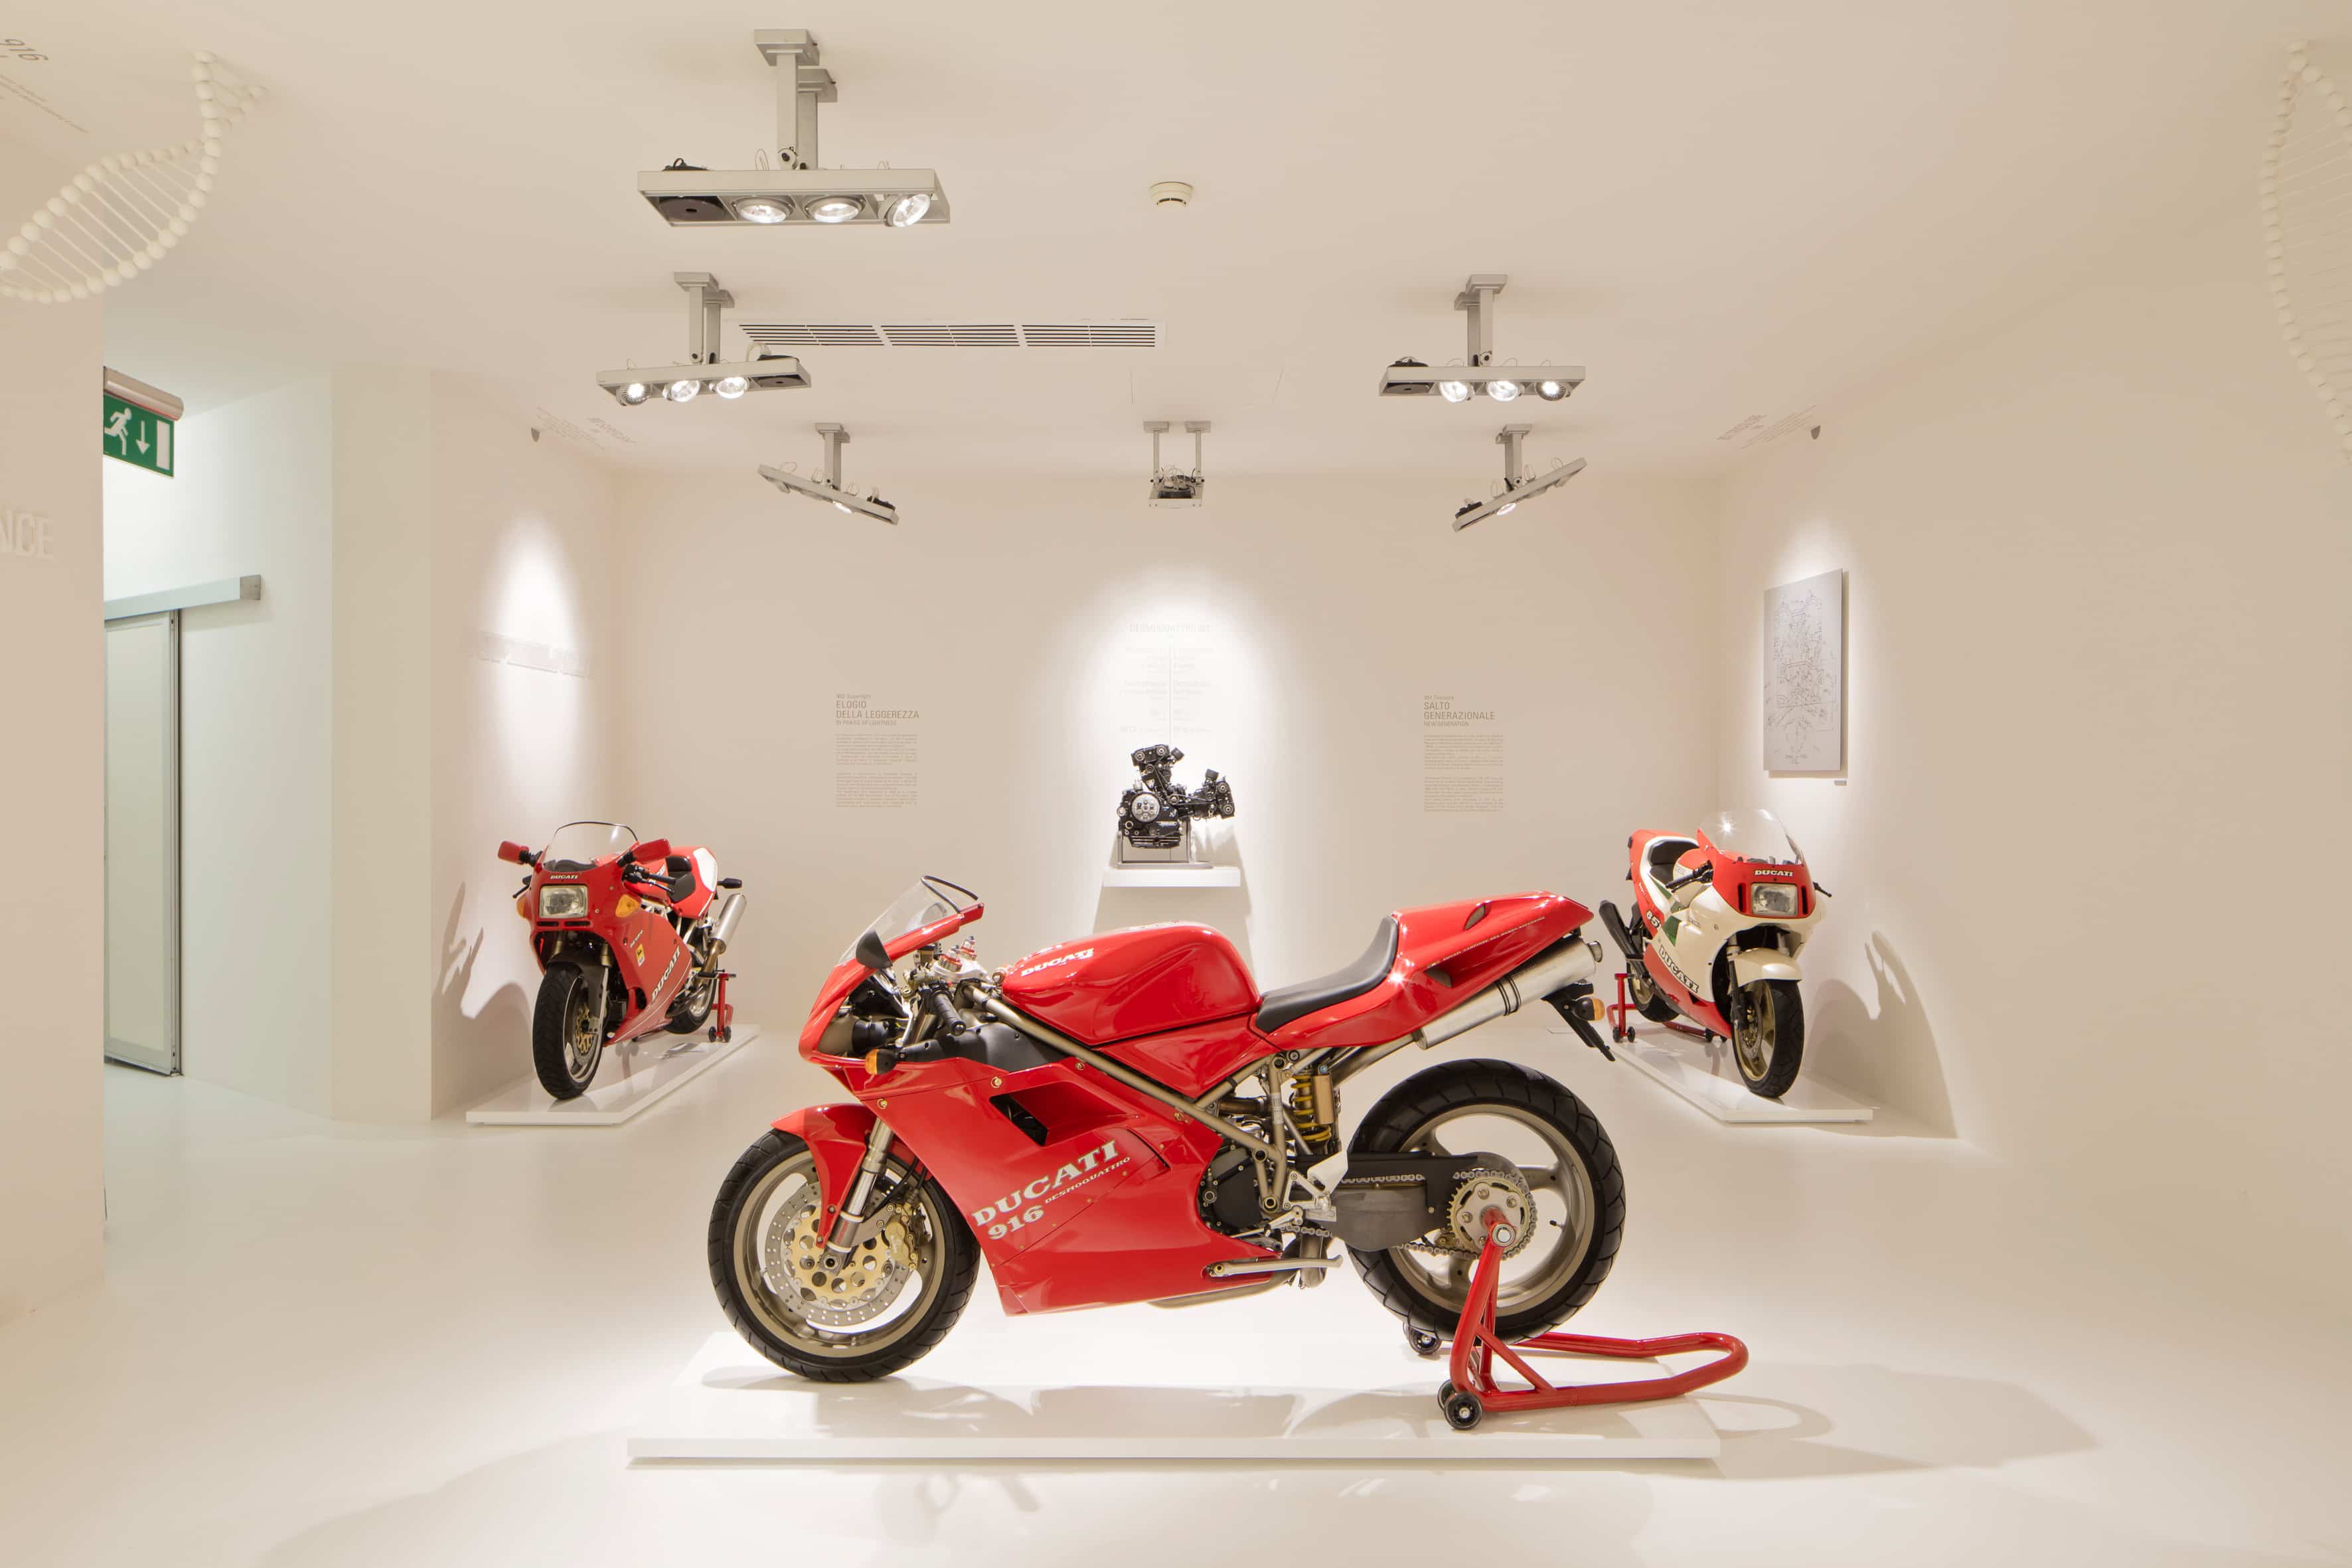 Ducatiミュージアム　7月4日から営業を再開